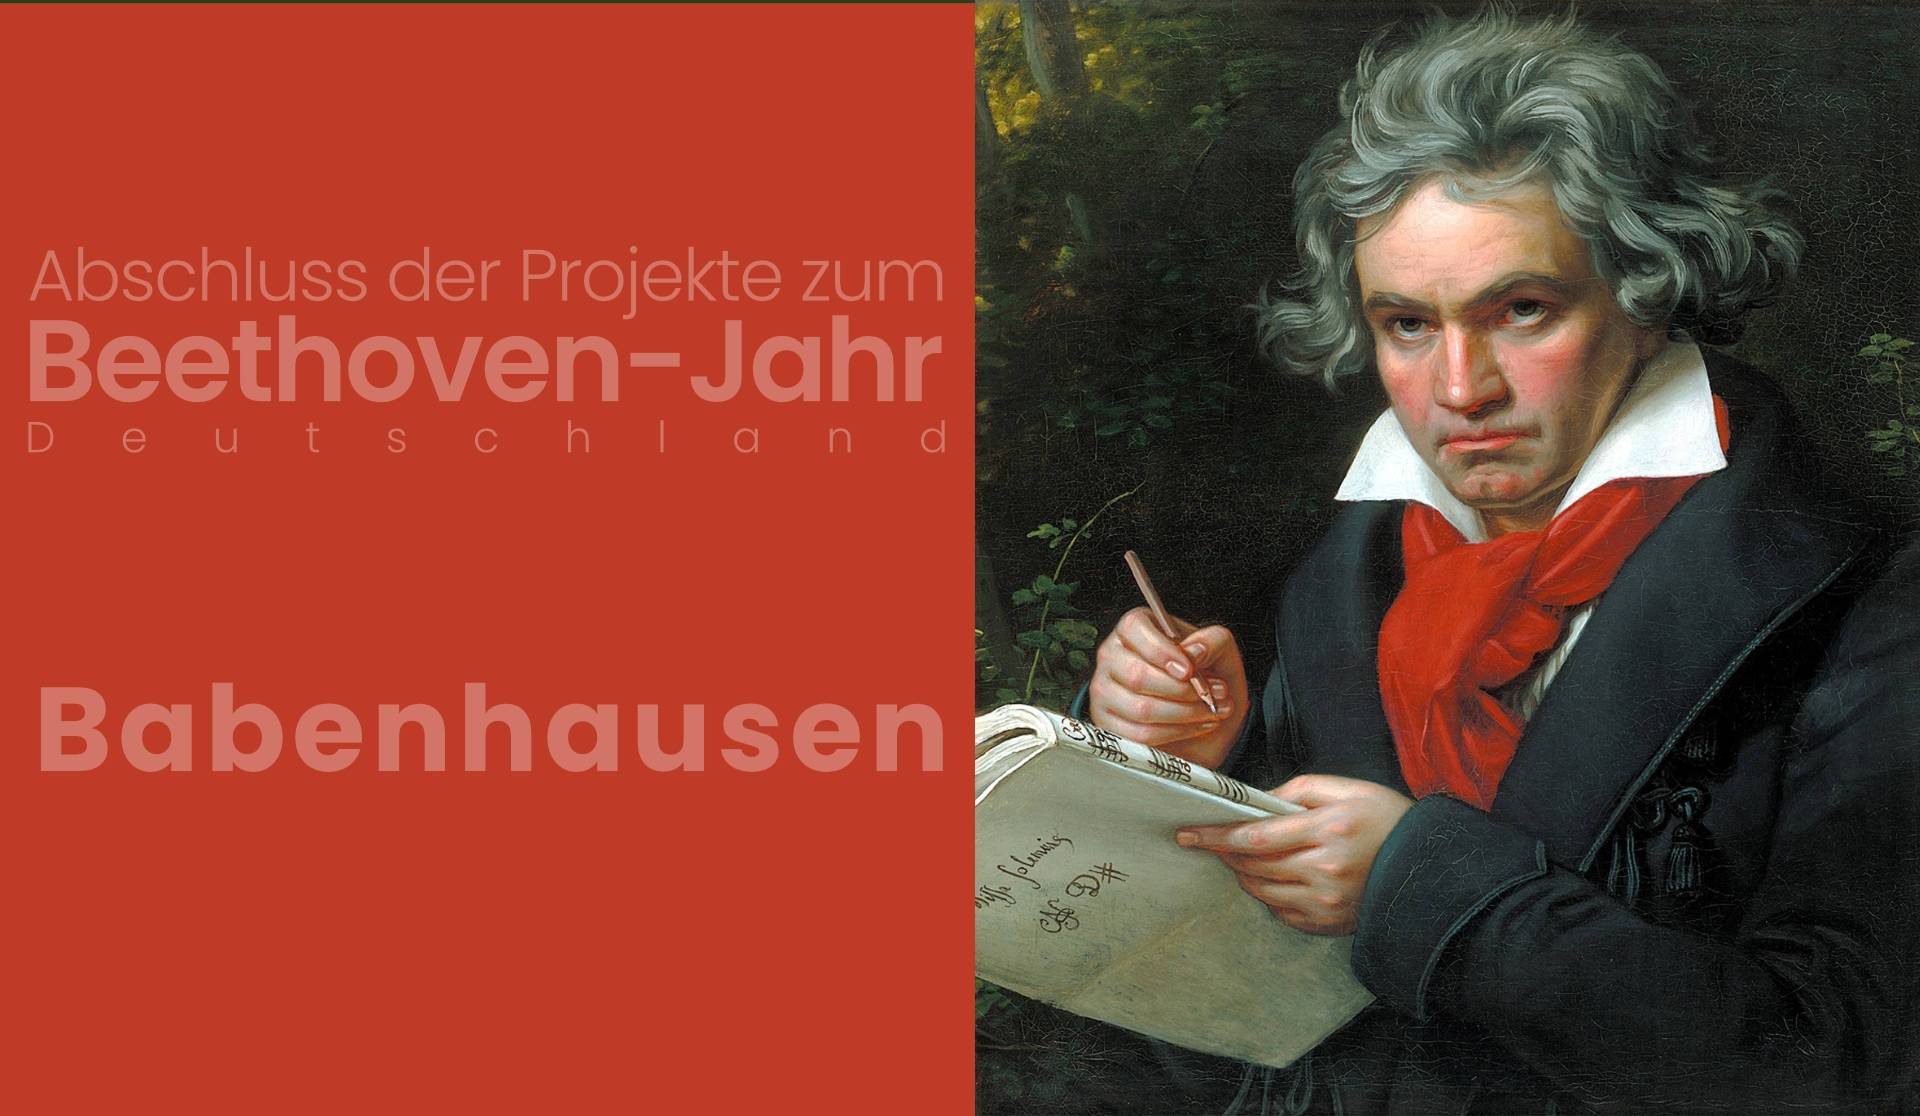 18.12.2021 – Zakończenie Roku Beethovena, Babenhausen, Niemcy